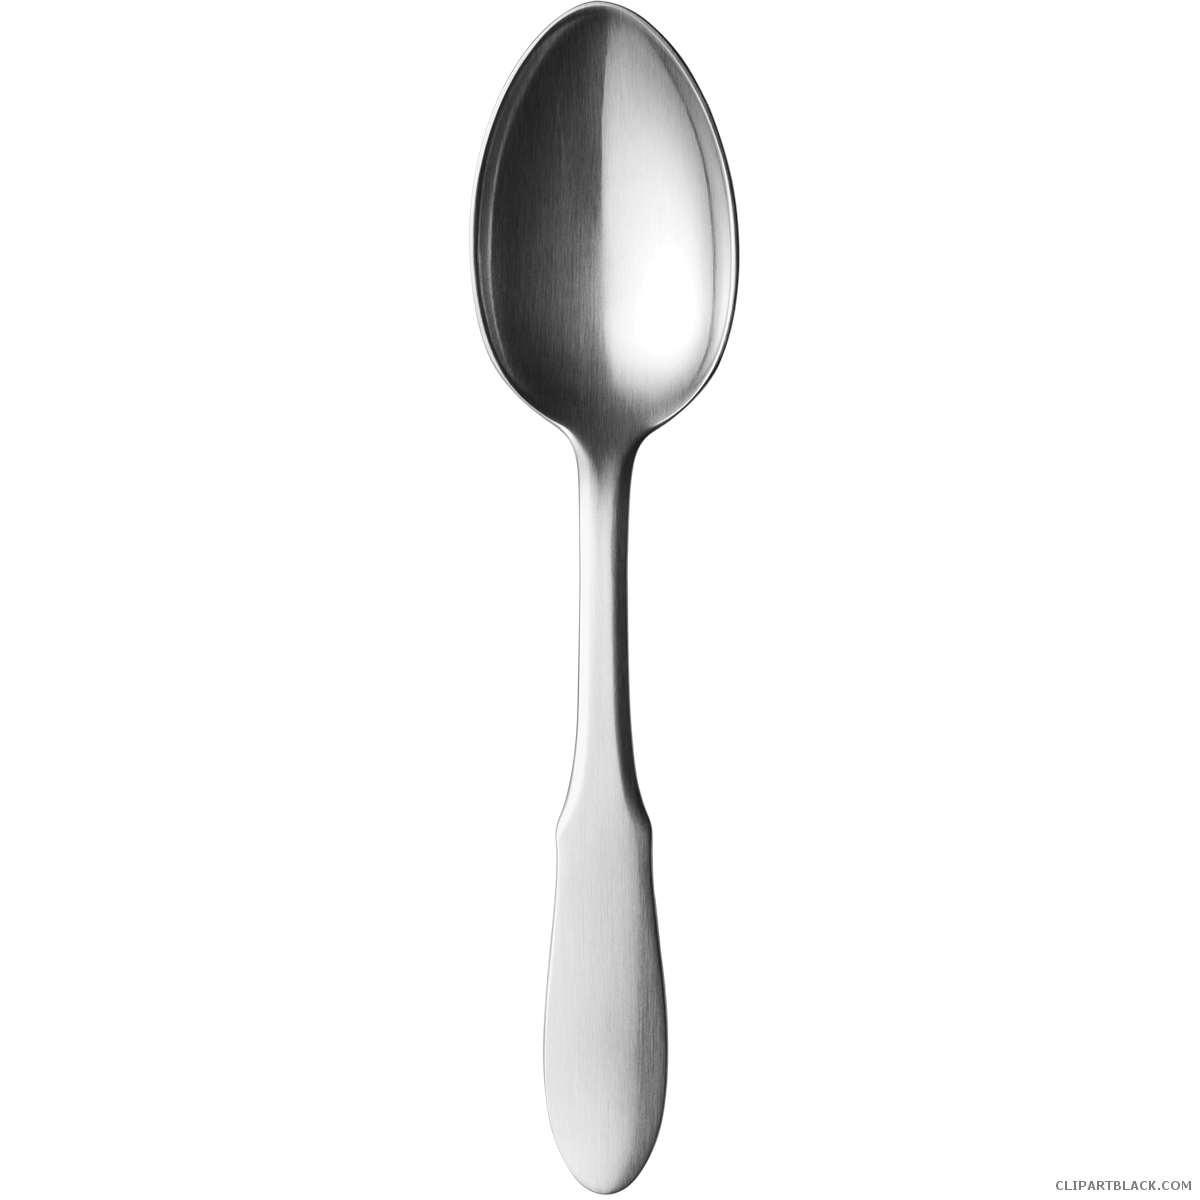 Clipartblack com tools free. White clipart spoon